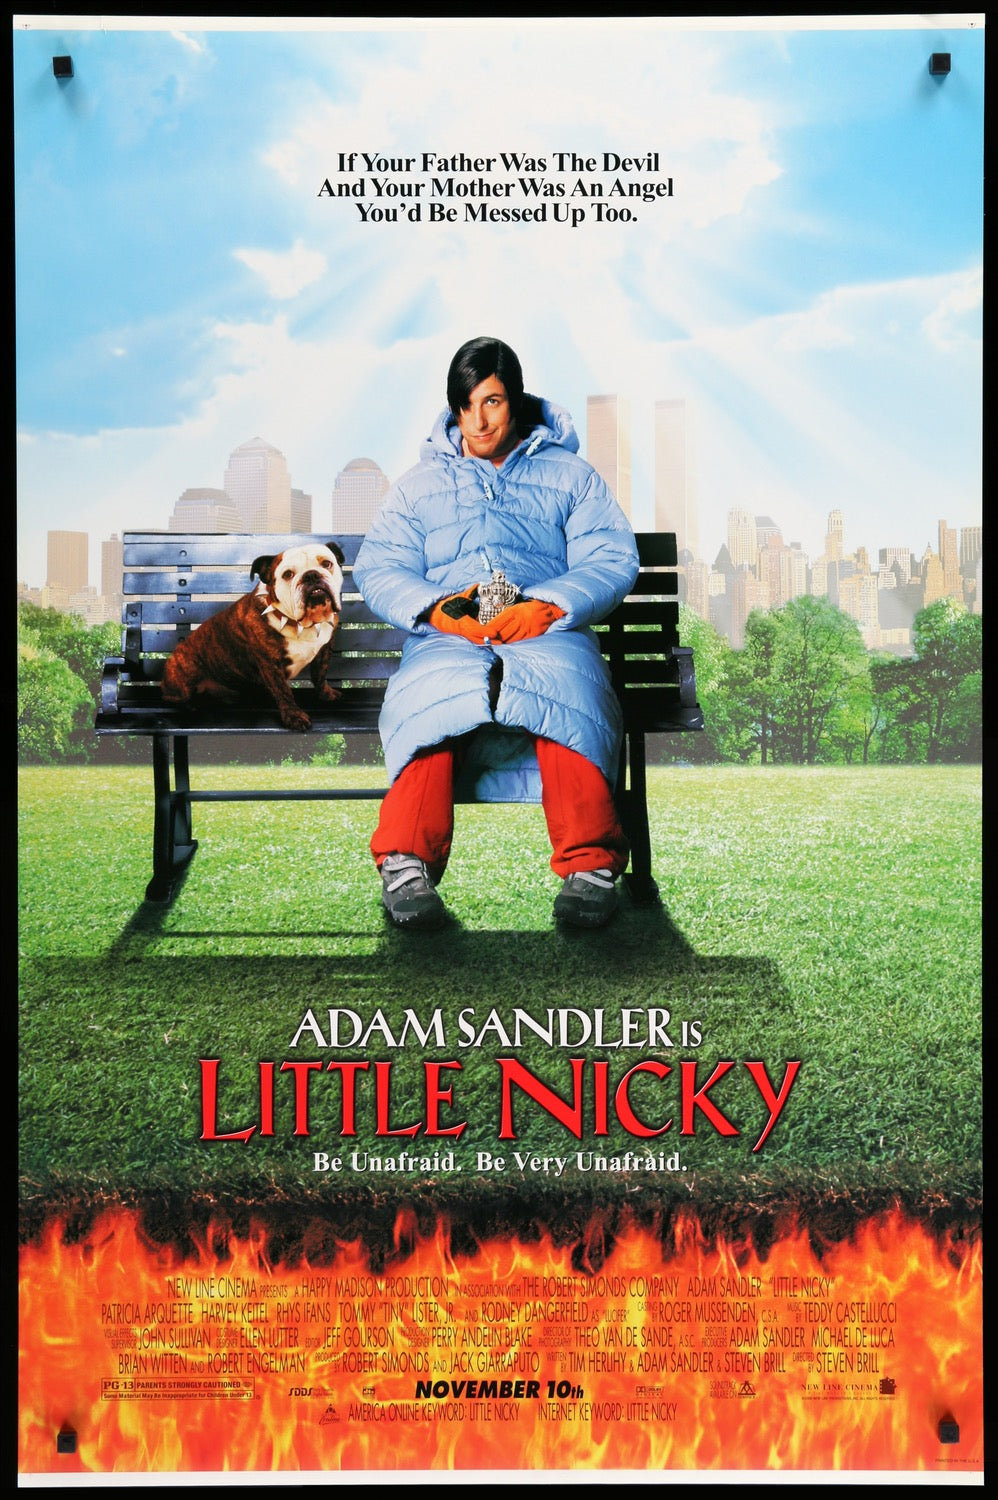 Little Nicky (2000) original movie poster for sale at Original Film Art